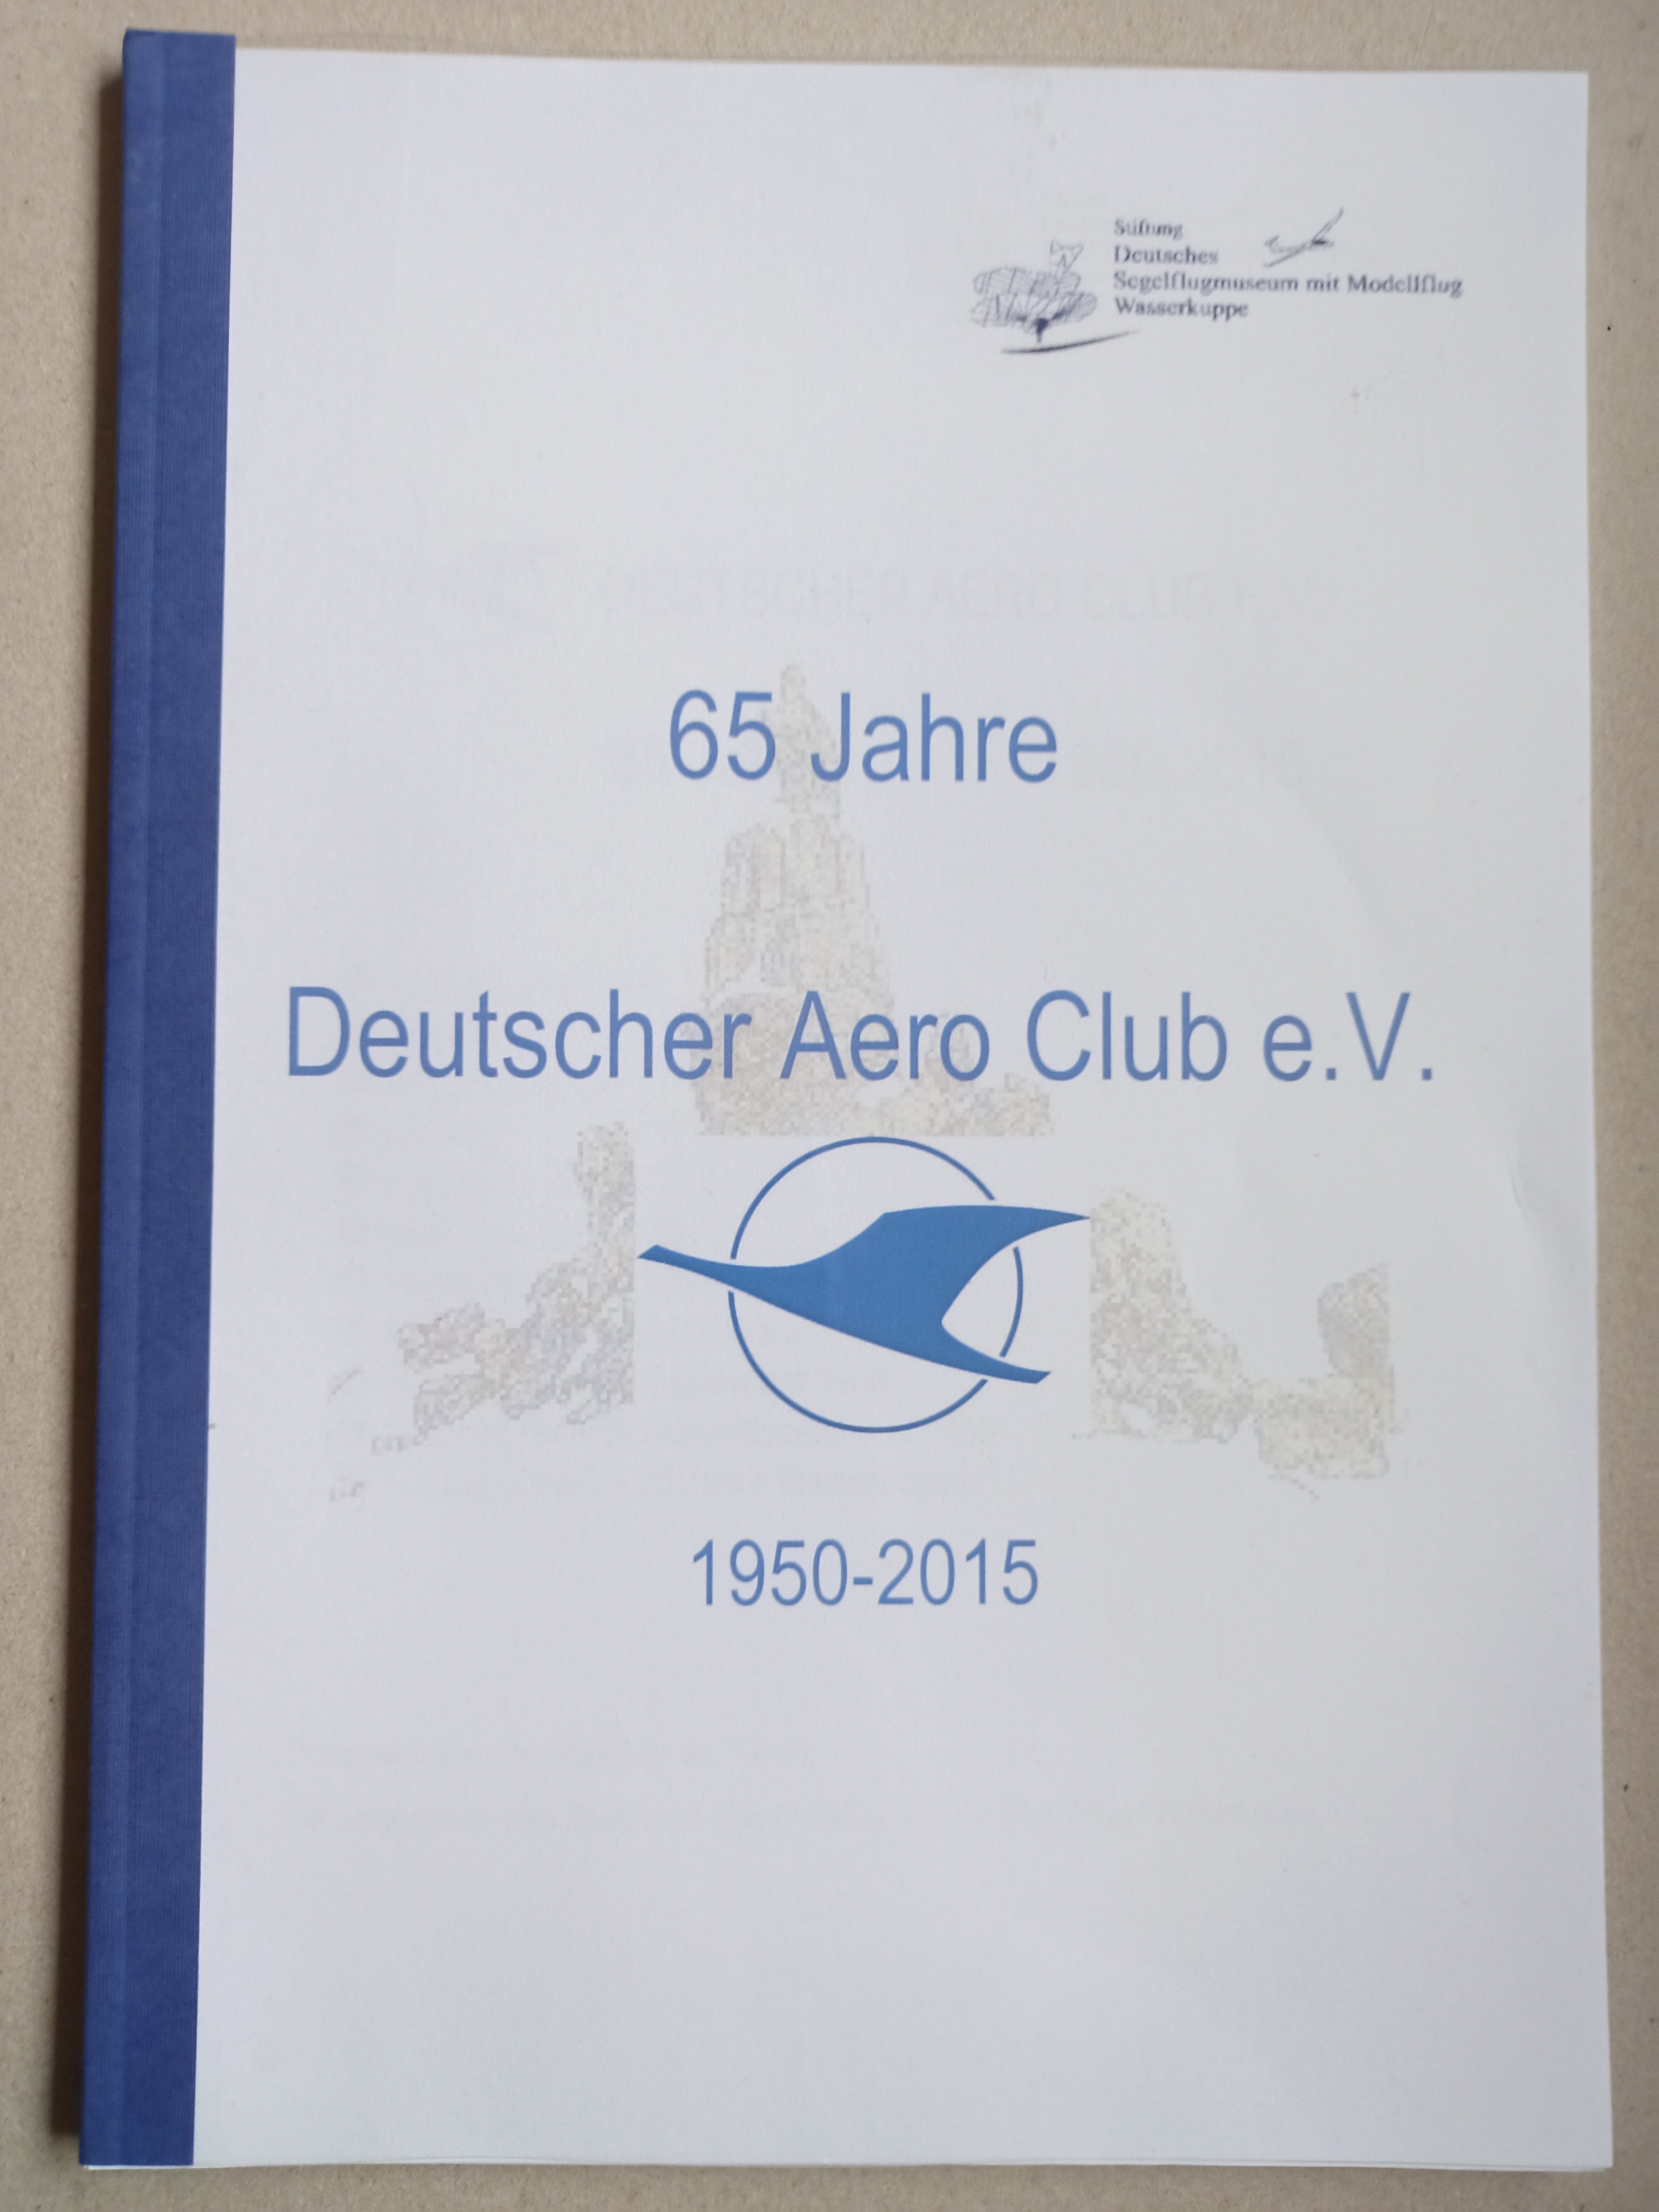 DAeC 65 Jahre (Deutsches Segelflugmuseum mit Modellflug CC BY-NC-SA)